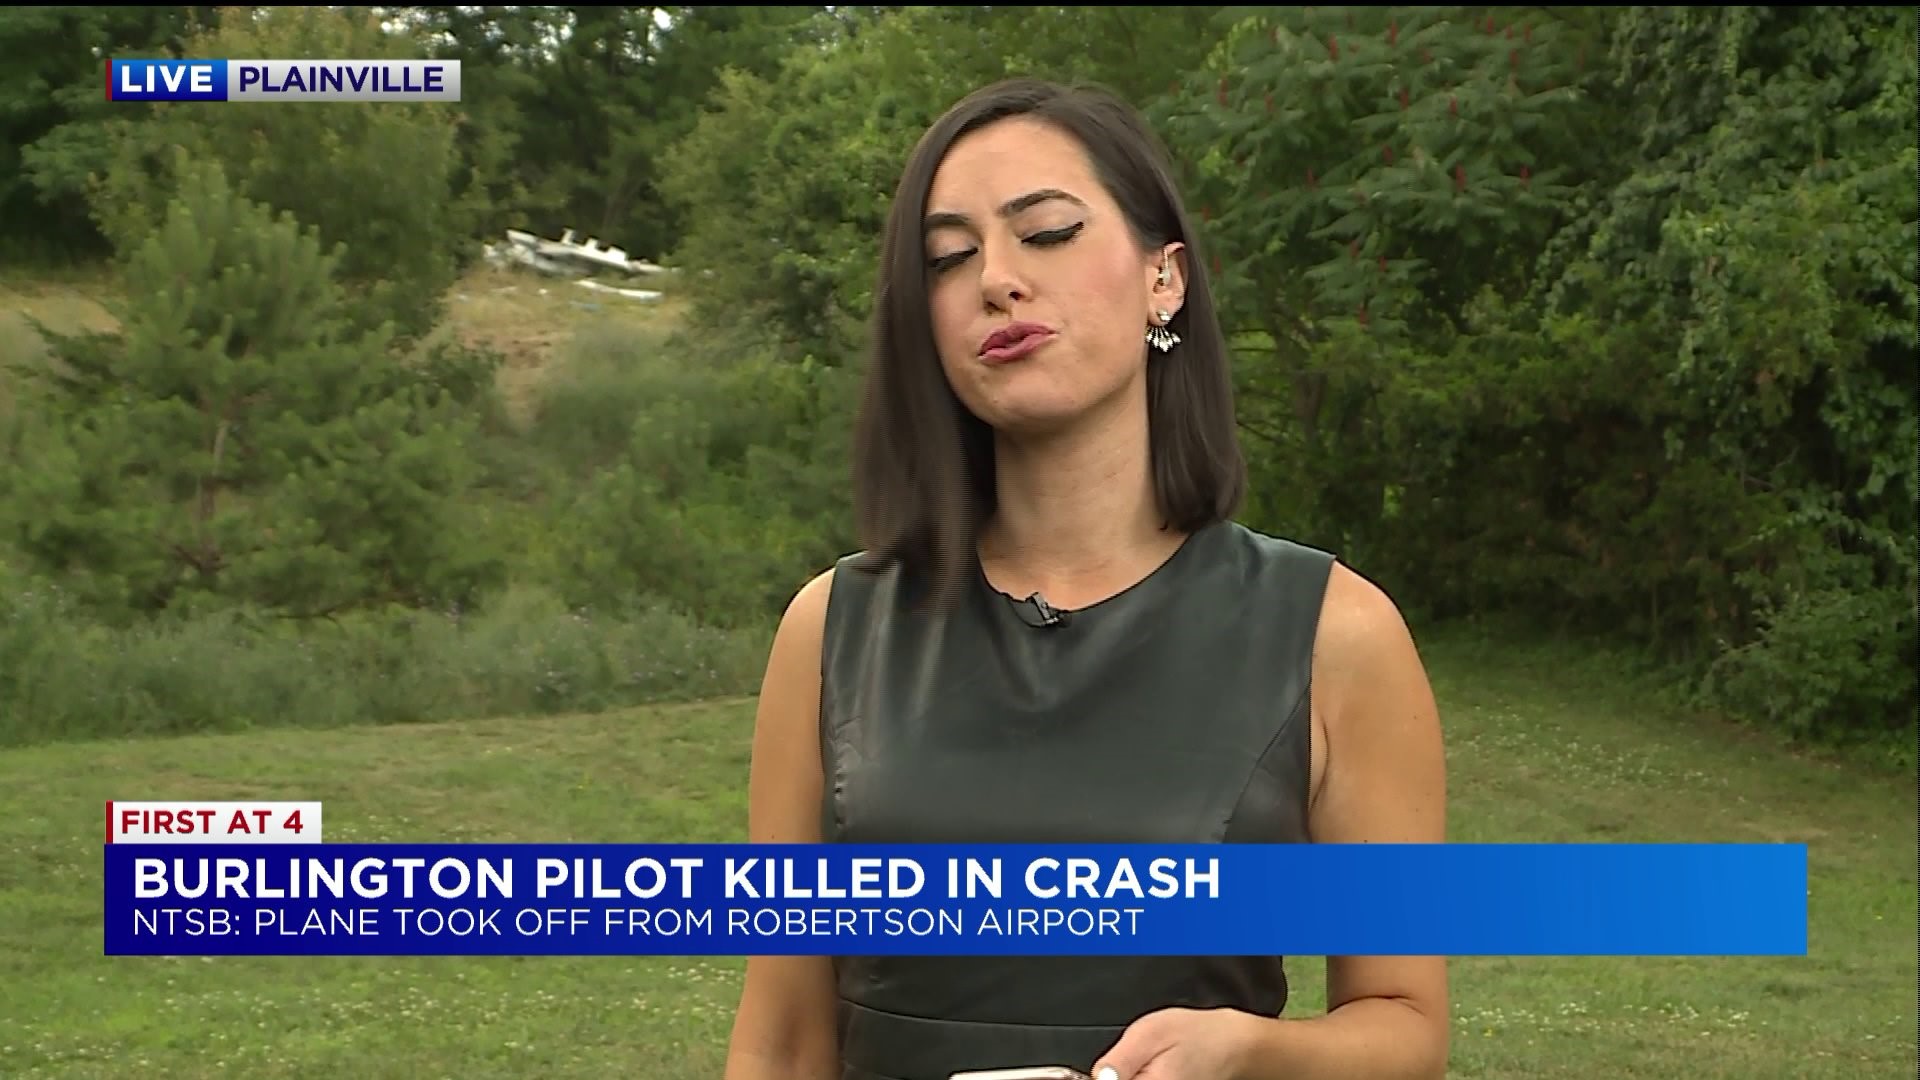 NTSB provides update on deadly Plainville plane crash